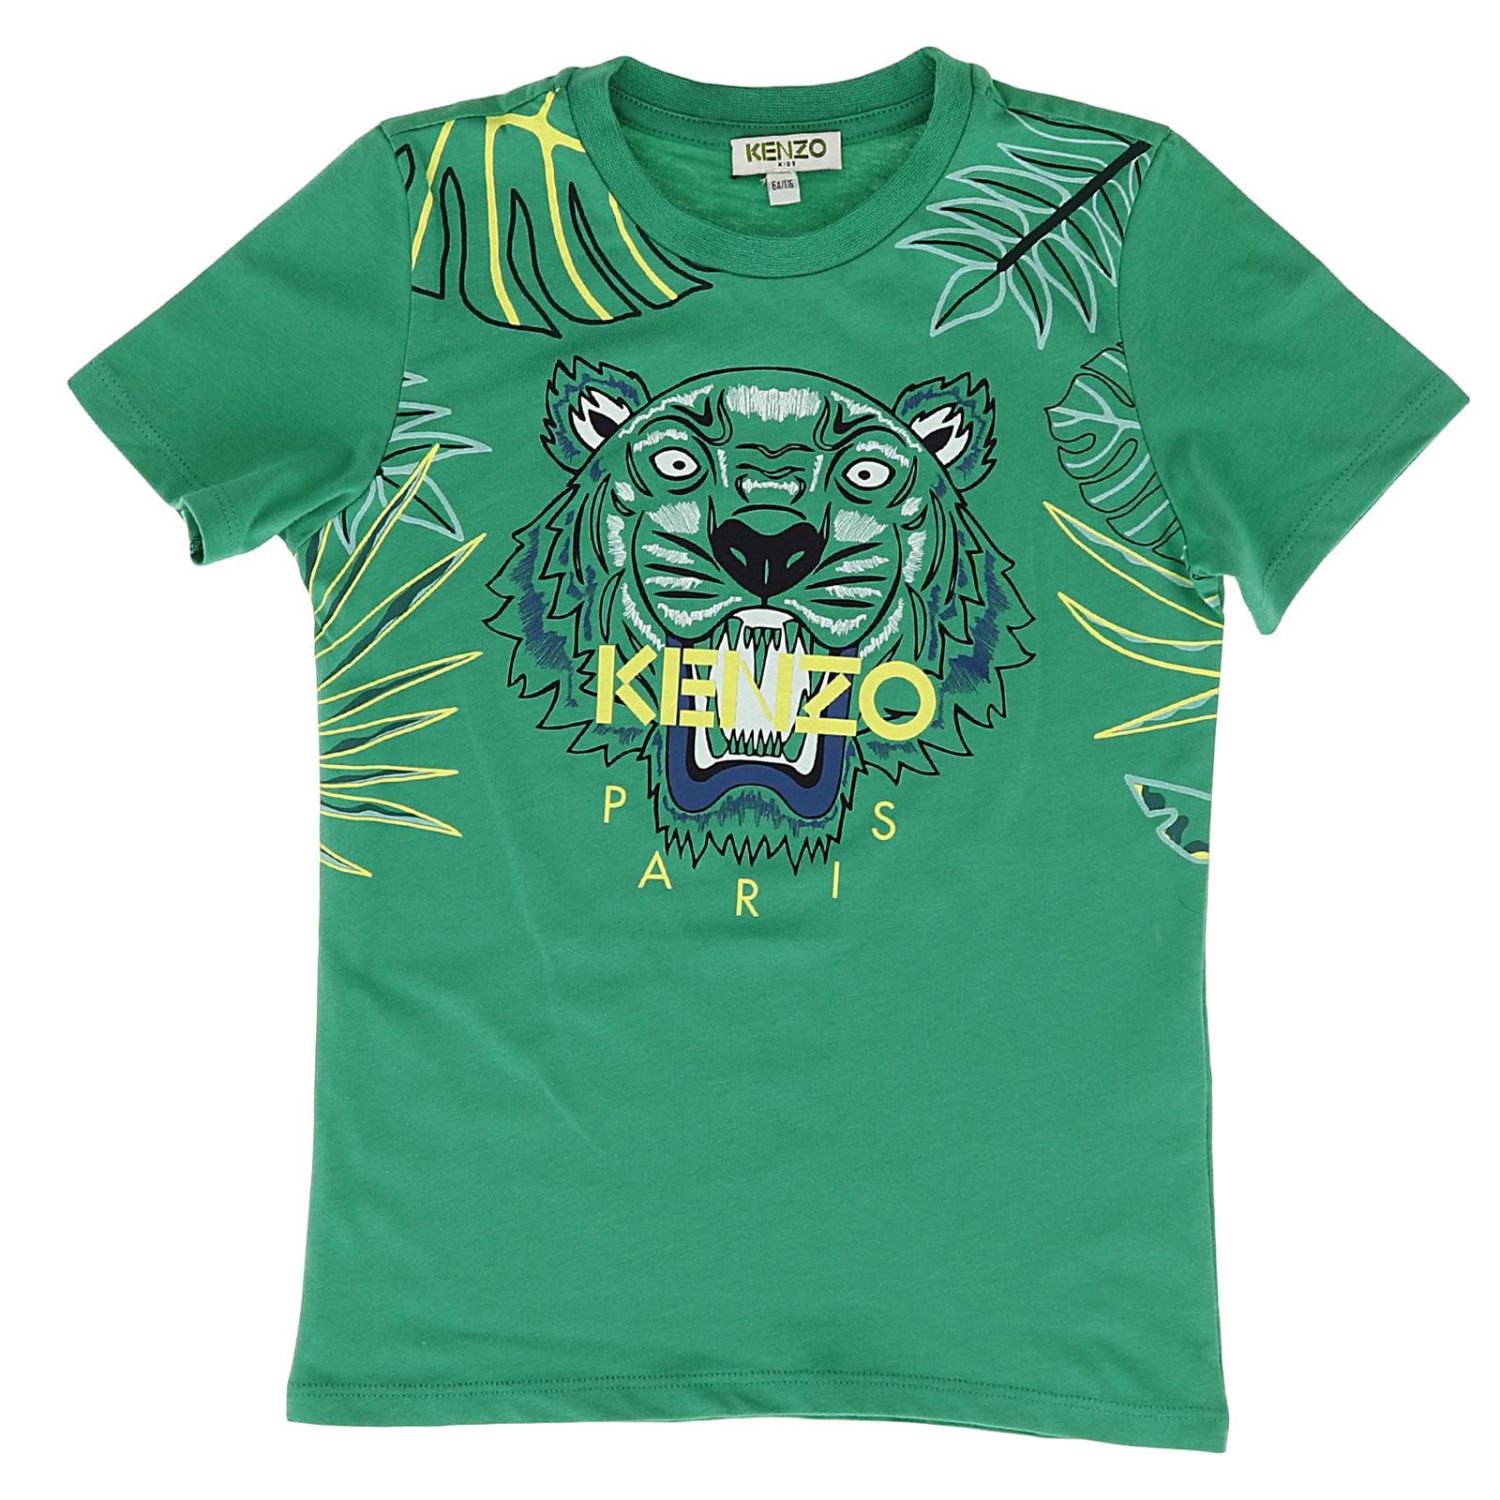 Kenzo Kids Outlet: t-shirt for boys - Green | Kenzo Kids t-shirt ...